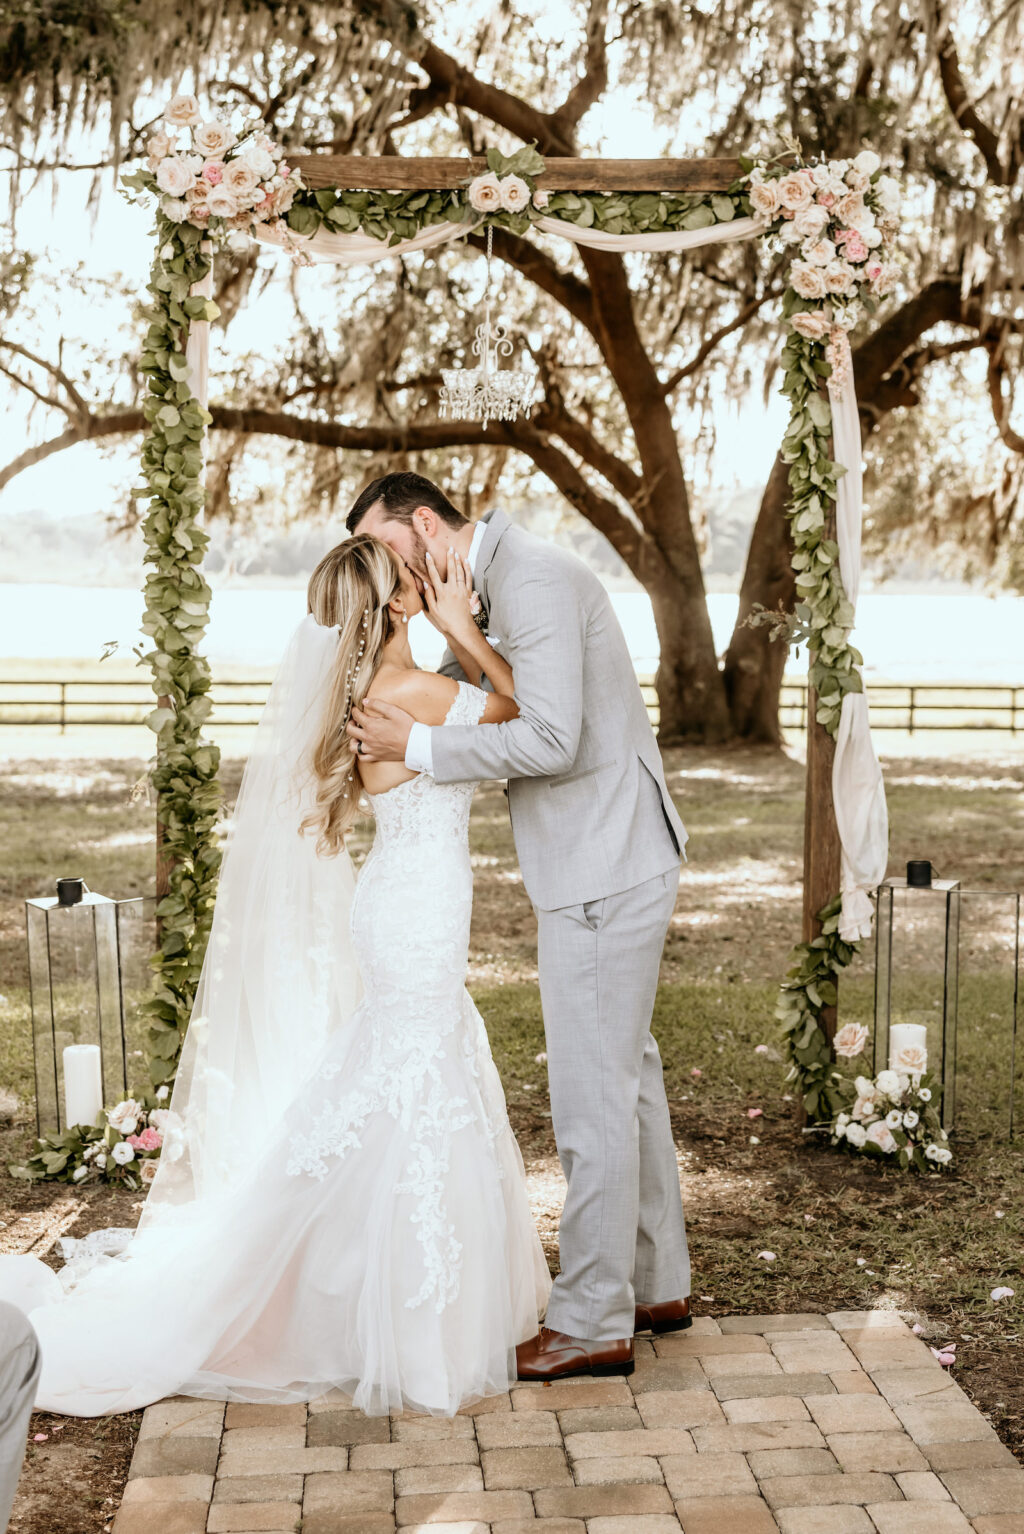 Bride and Groom First Kiss Wedding Portrait | Covington Farms Rustic Florida Wedding Venue